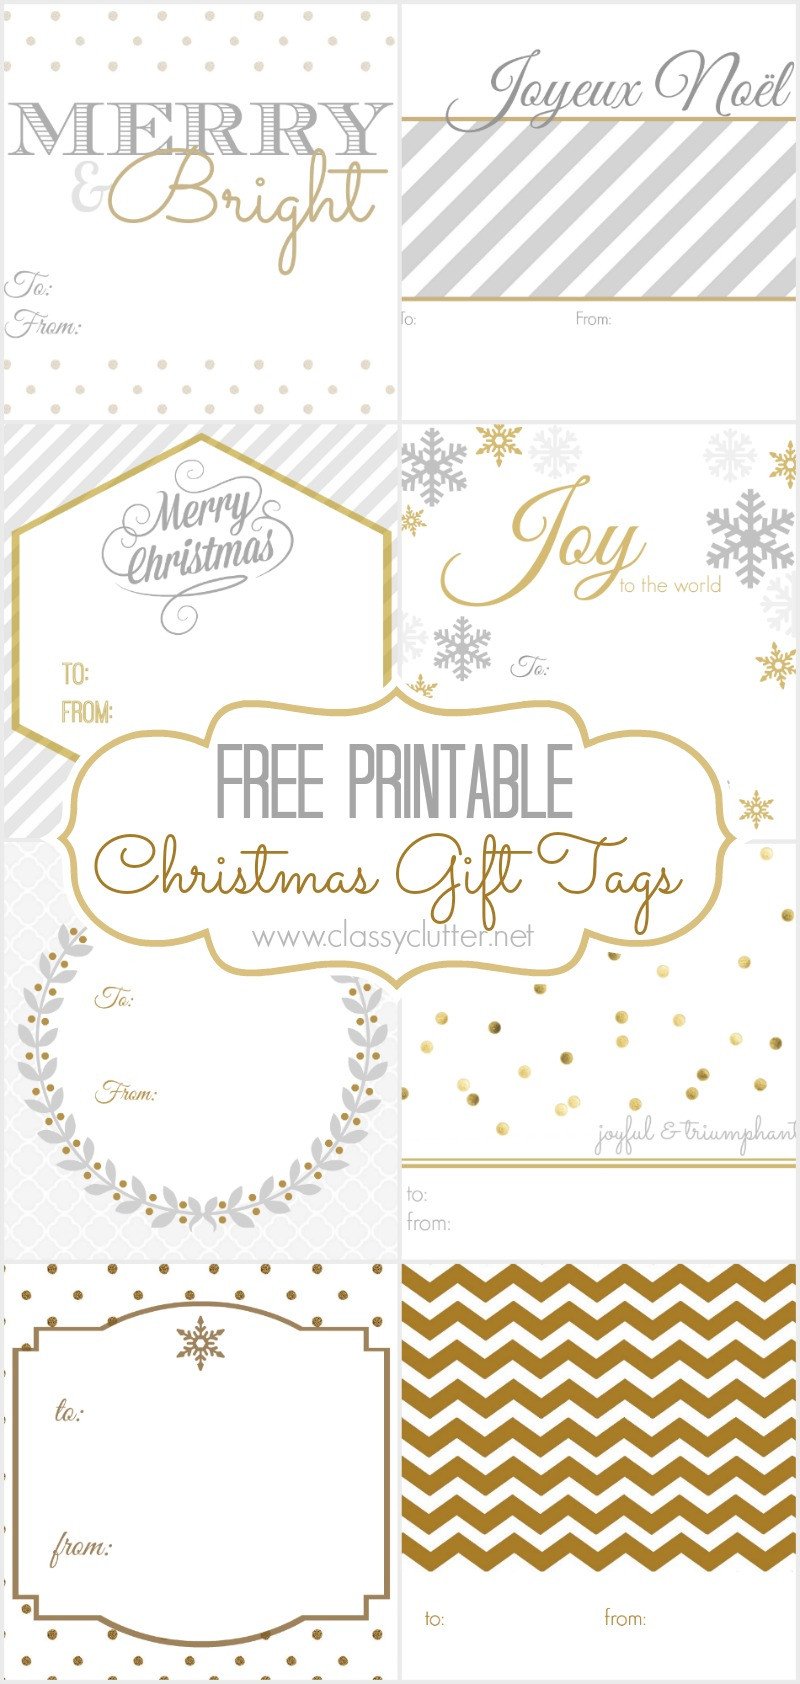 FREE Christmas Gift Tags 8 printable designs Classy